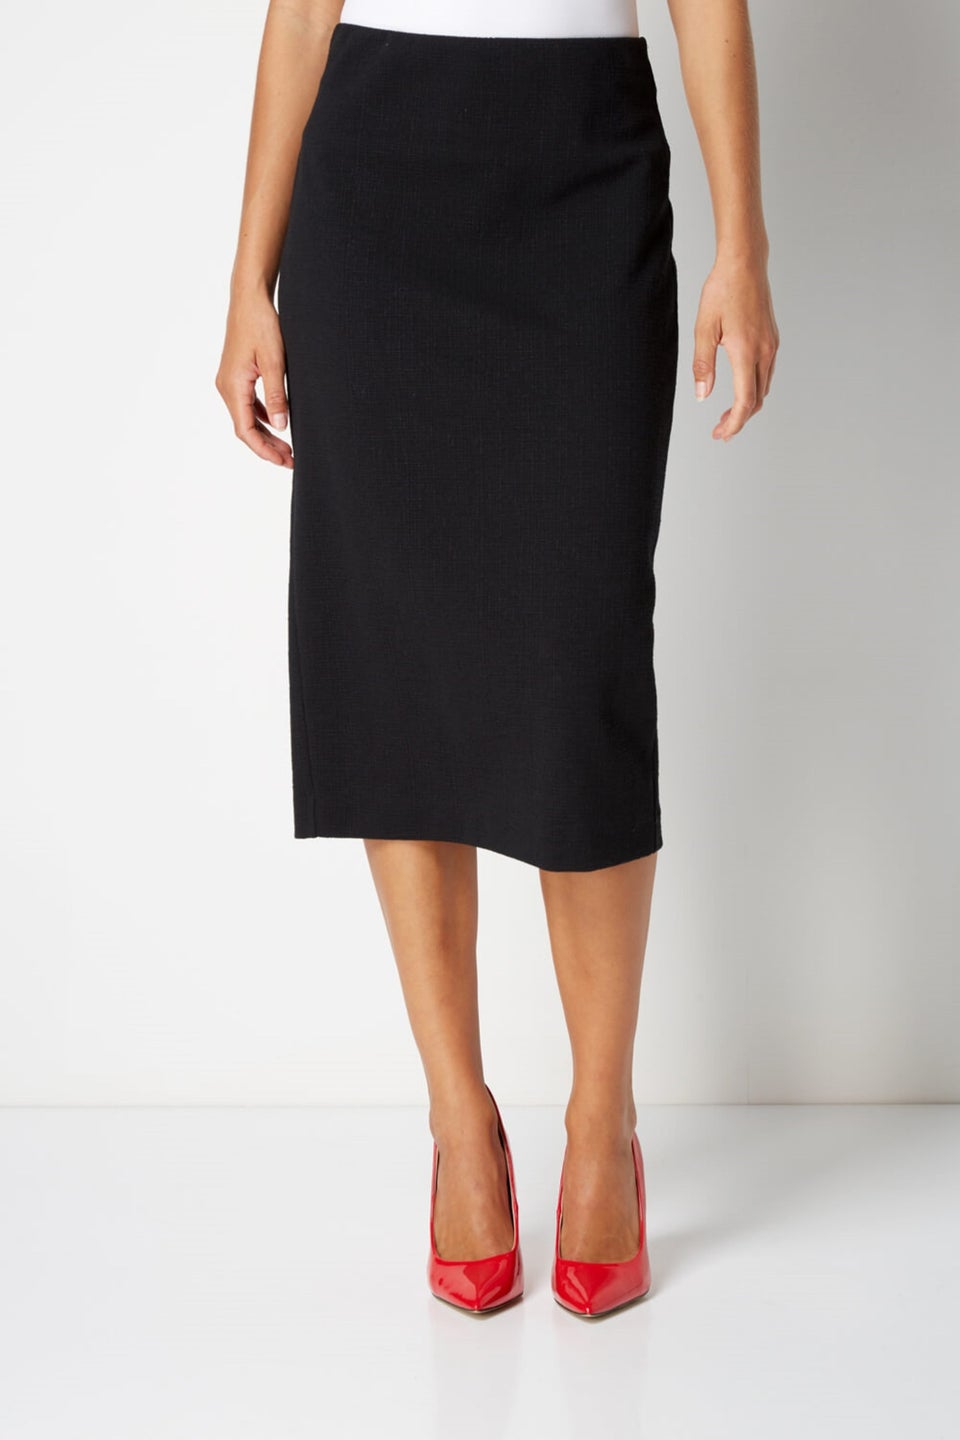 Roman Black Stretch Jersey Textured Pencil Skirt